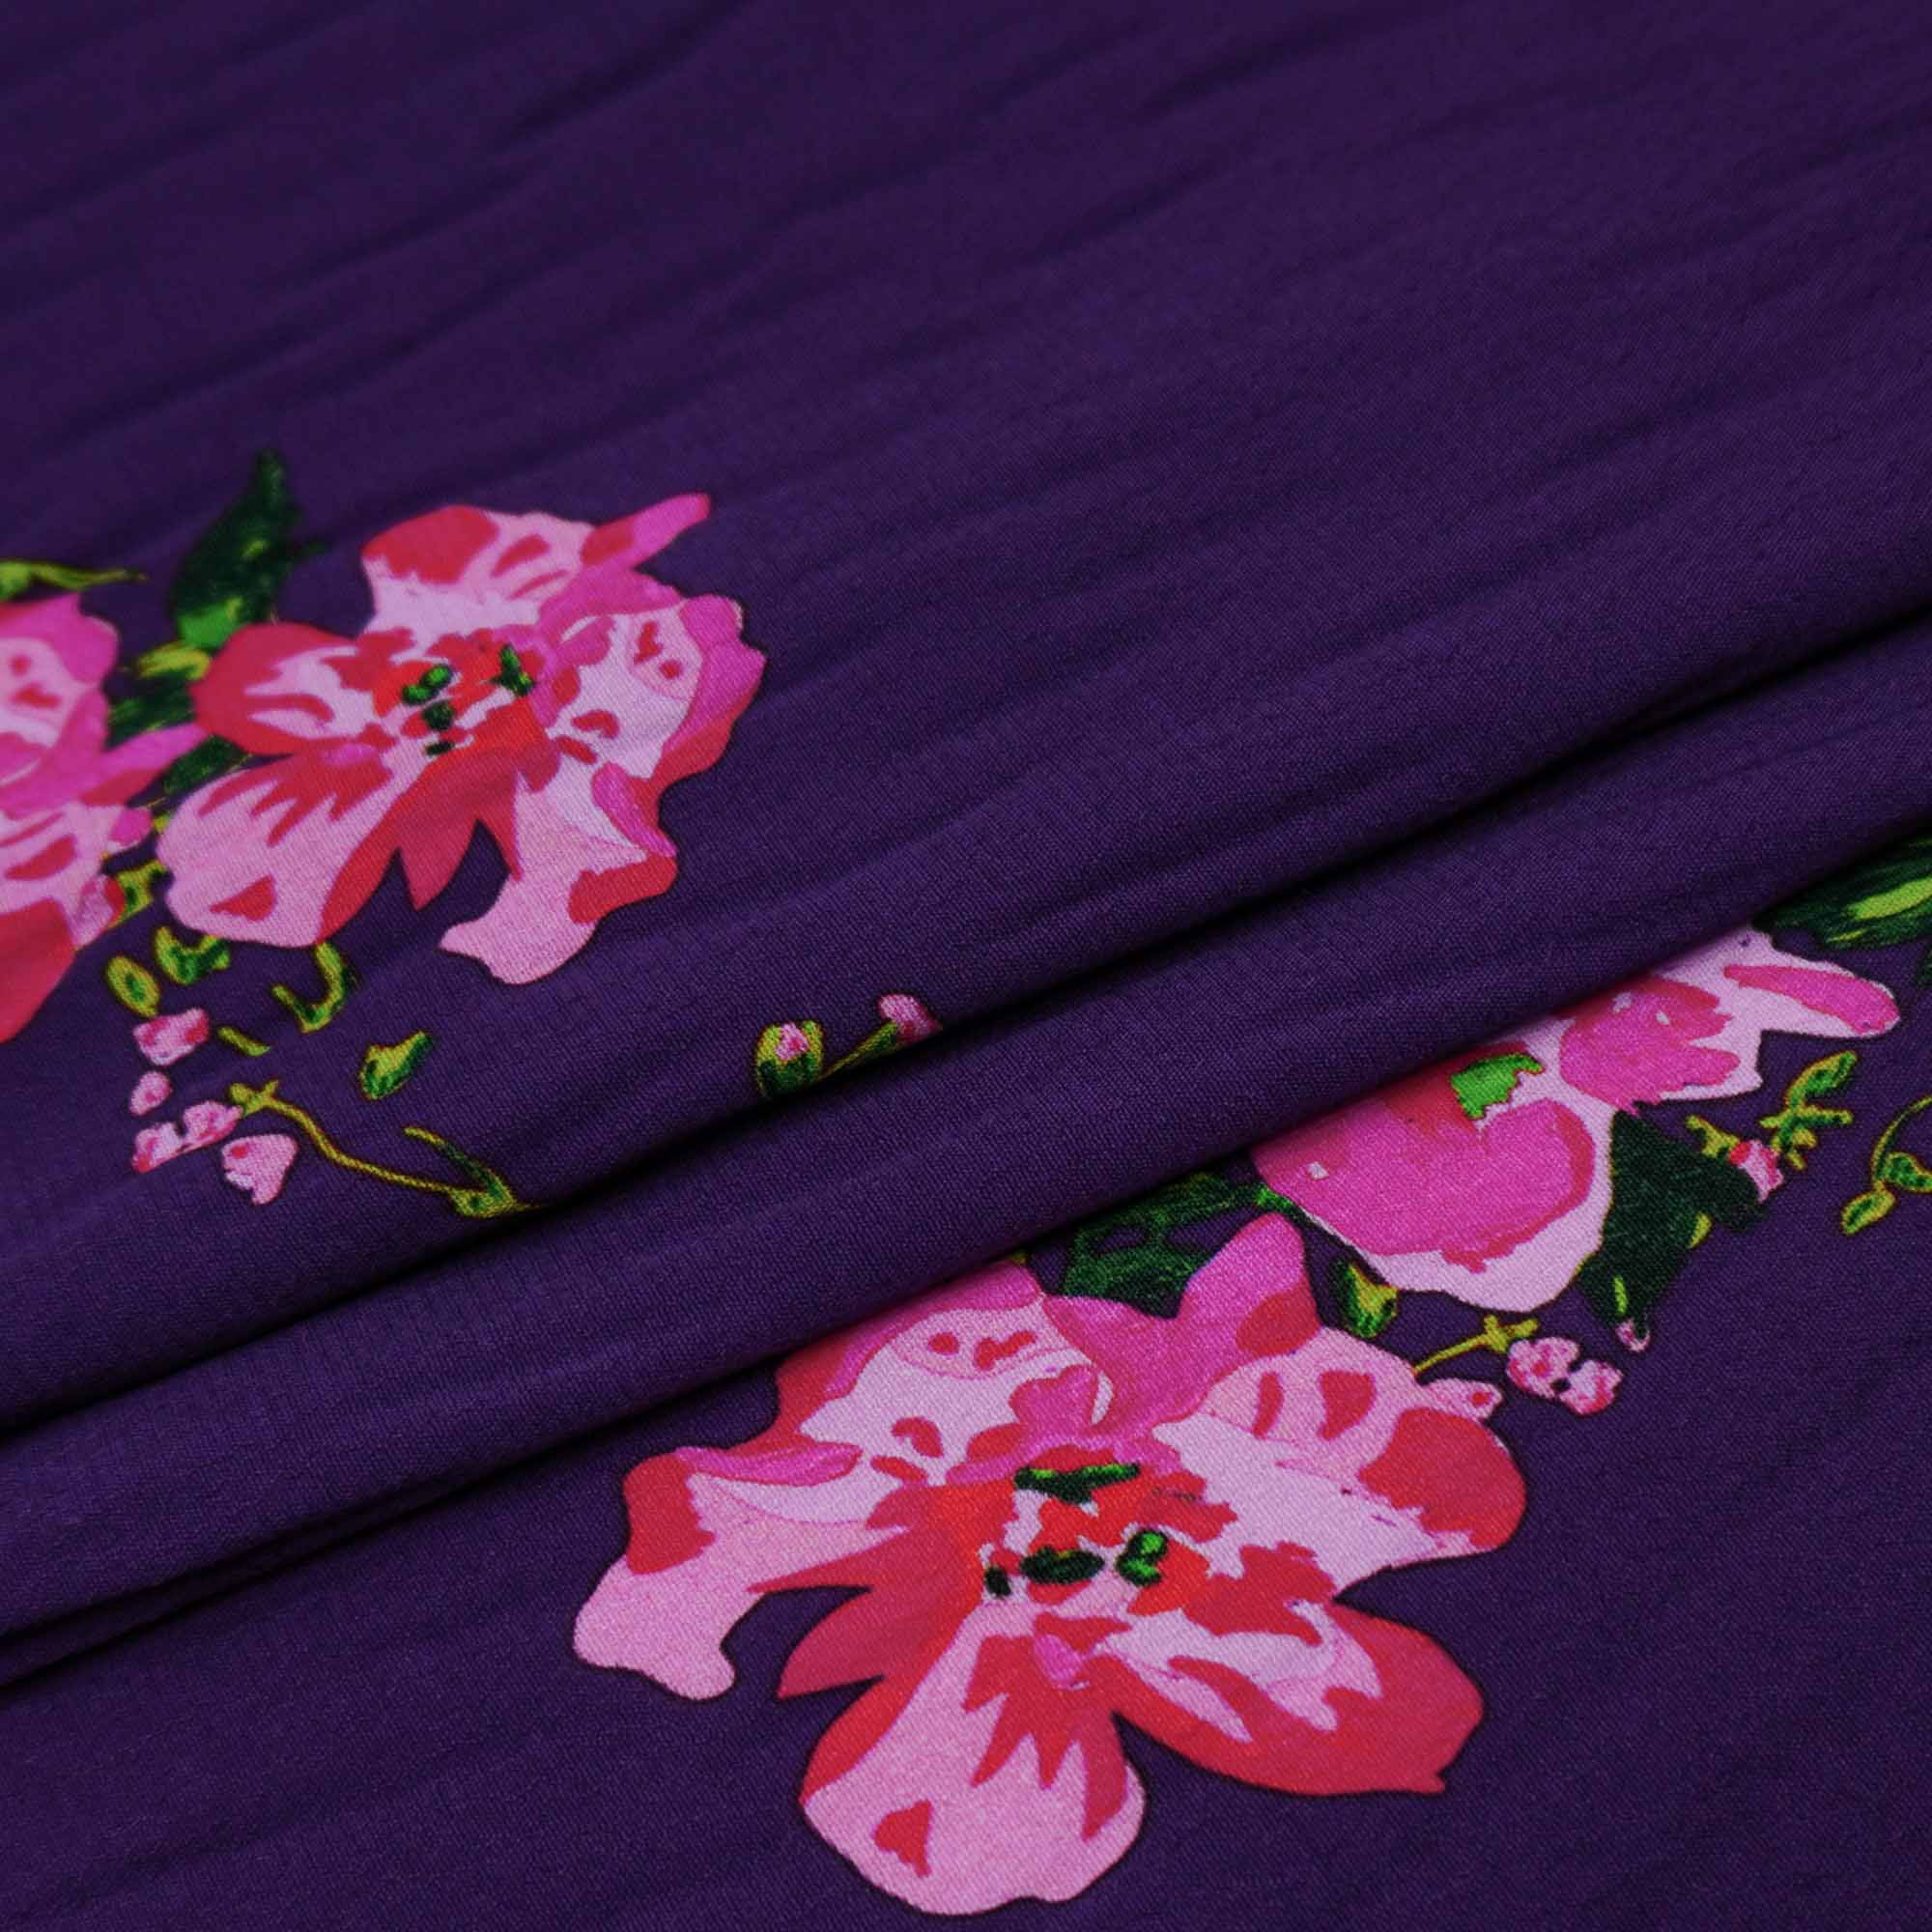 Tecido viscose roxo estampado floral (tecido italiano legítimo)